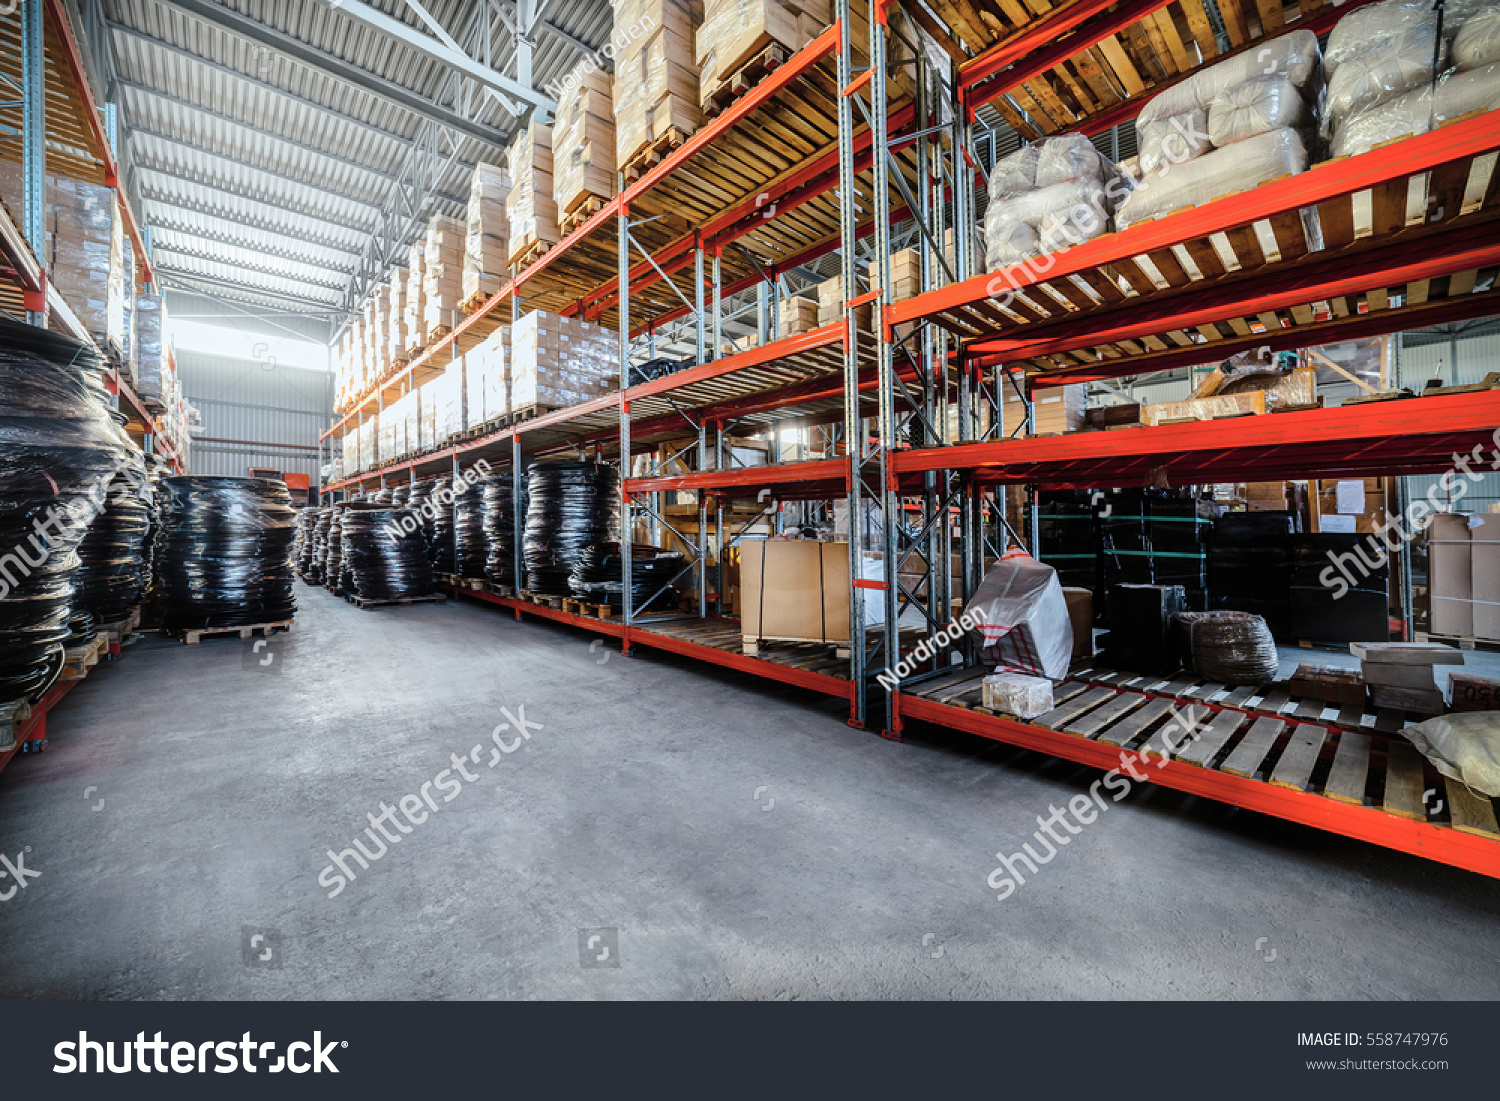 Warehouse Industrial Goods Large Long Racks Stock Photo ...
